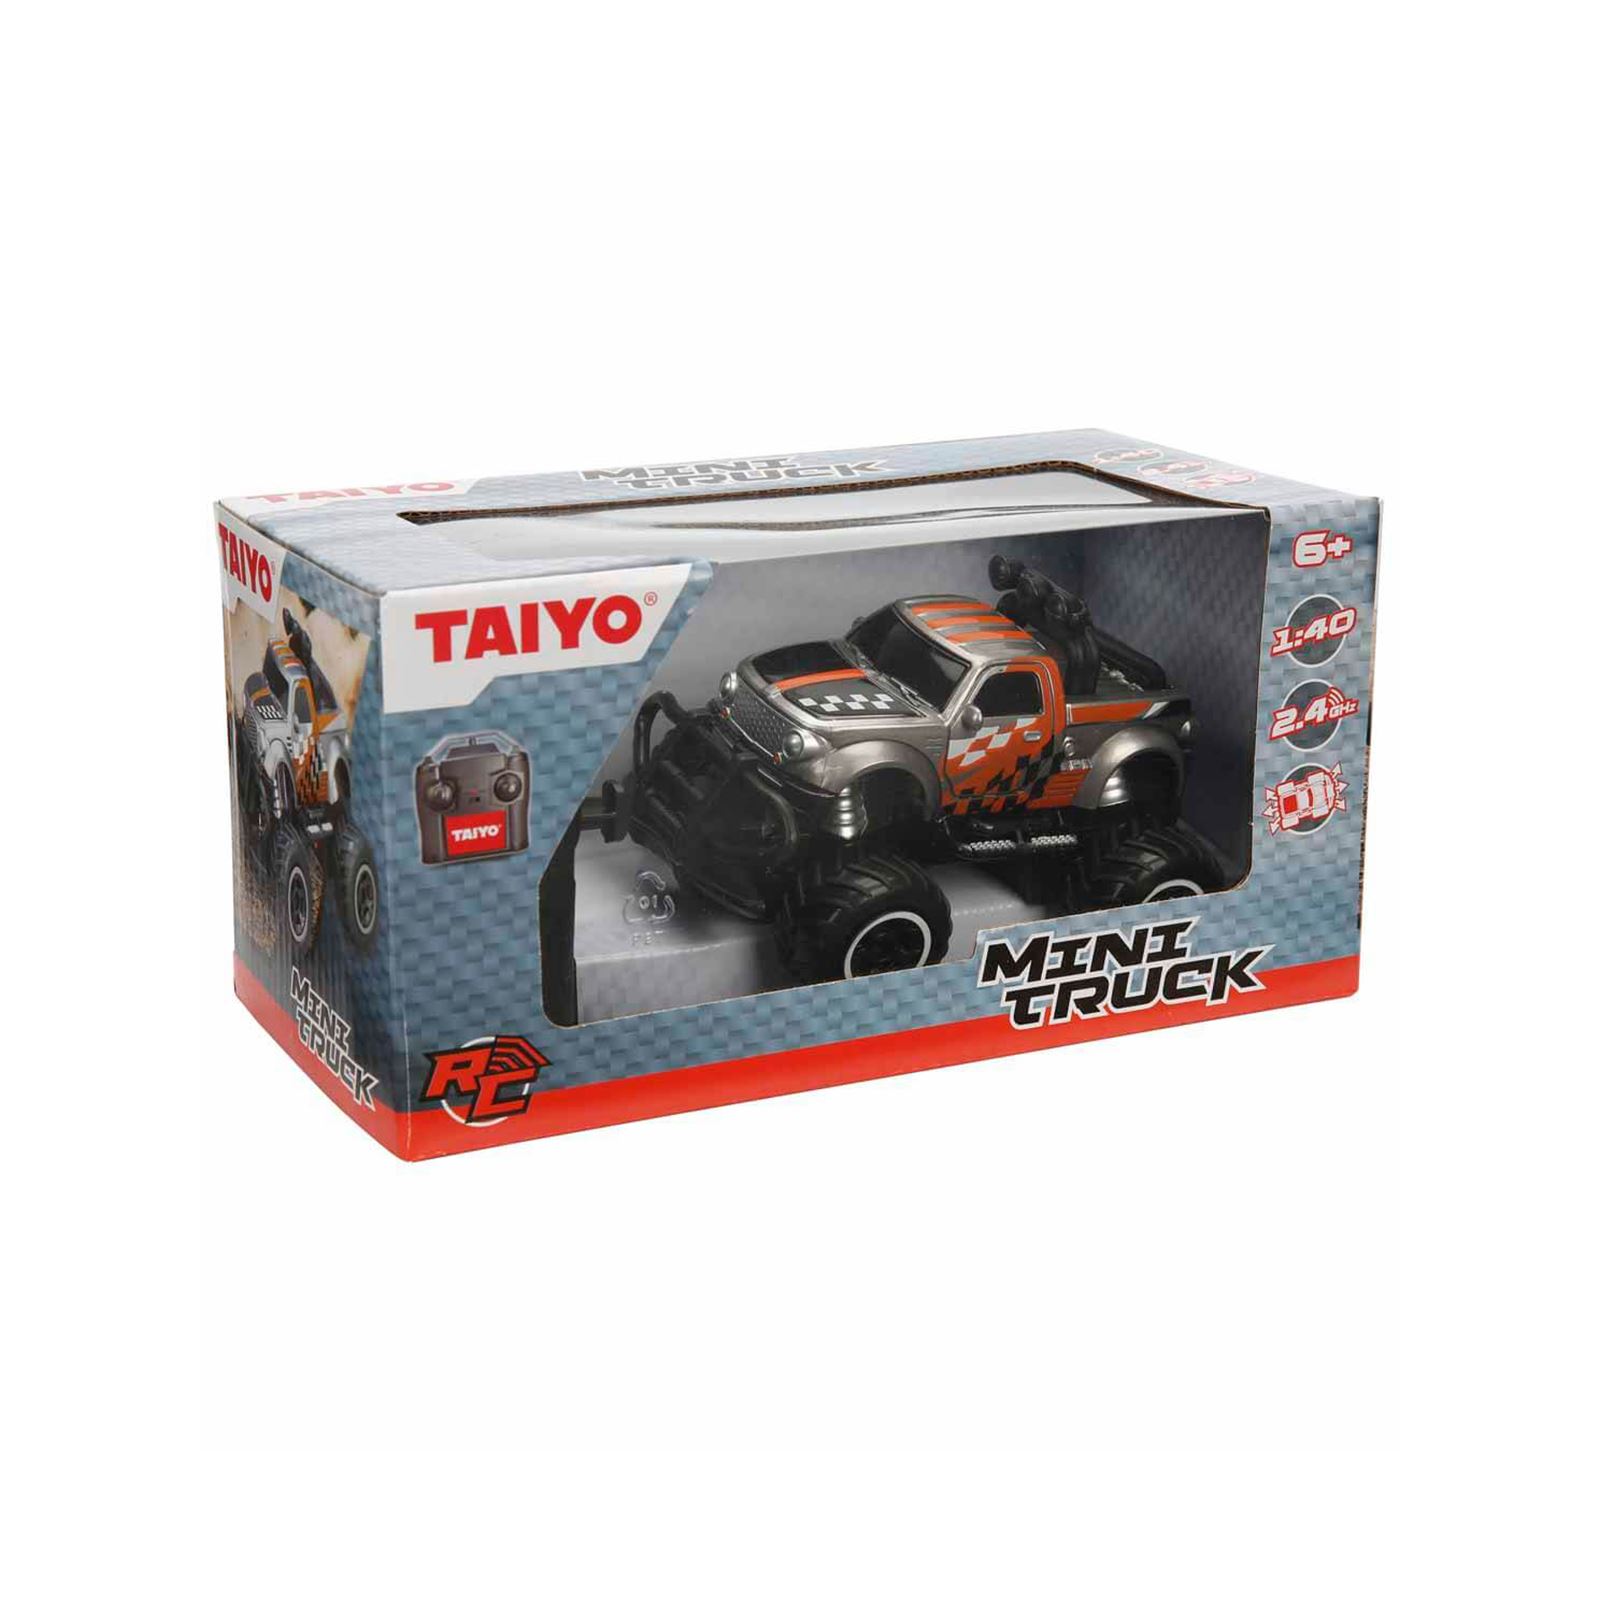 Taiyo 1:40 Mini Truck Uzaktan Kumandalı Araba Gri